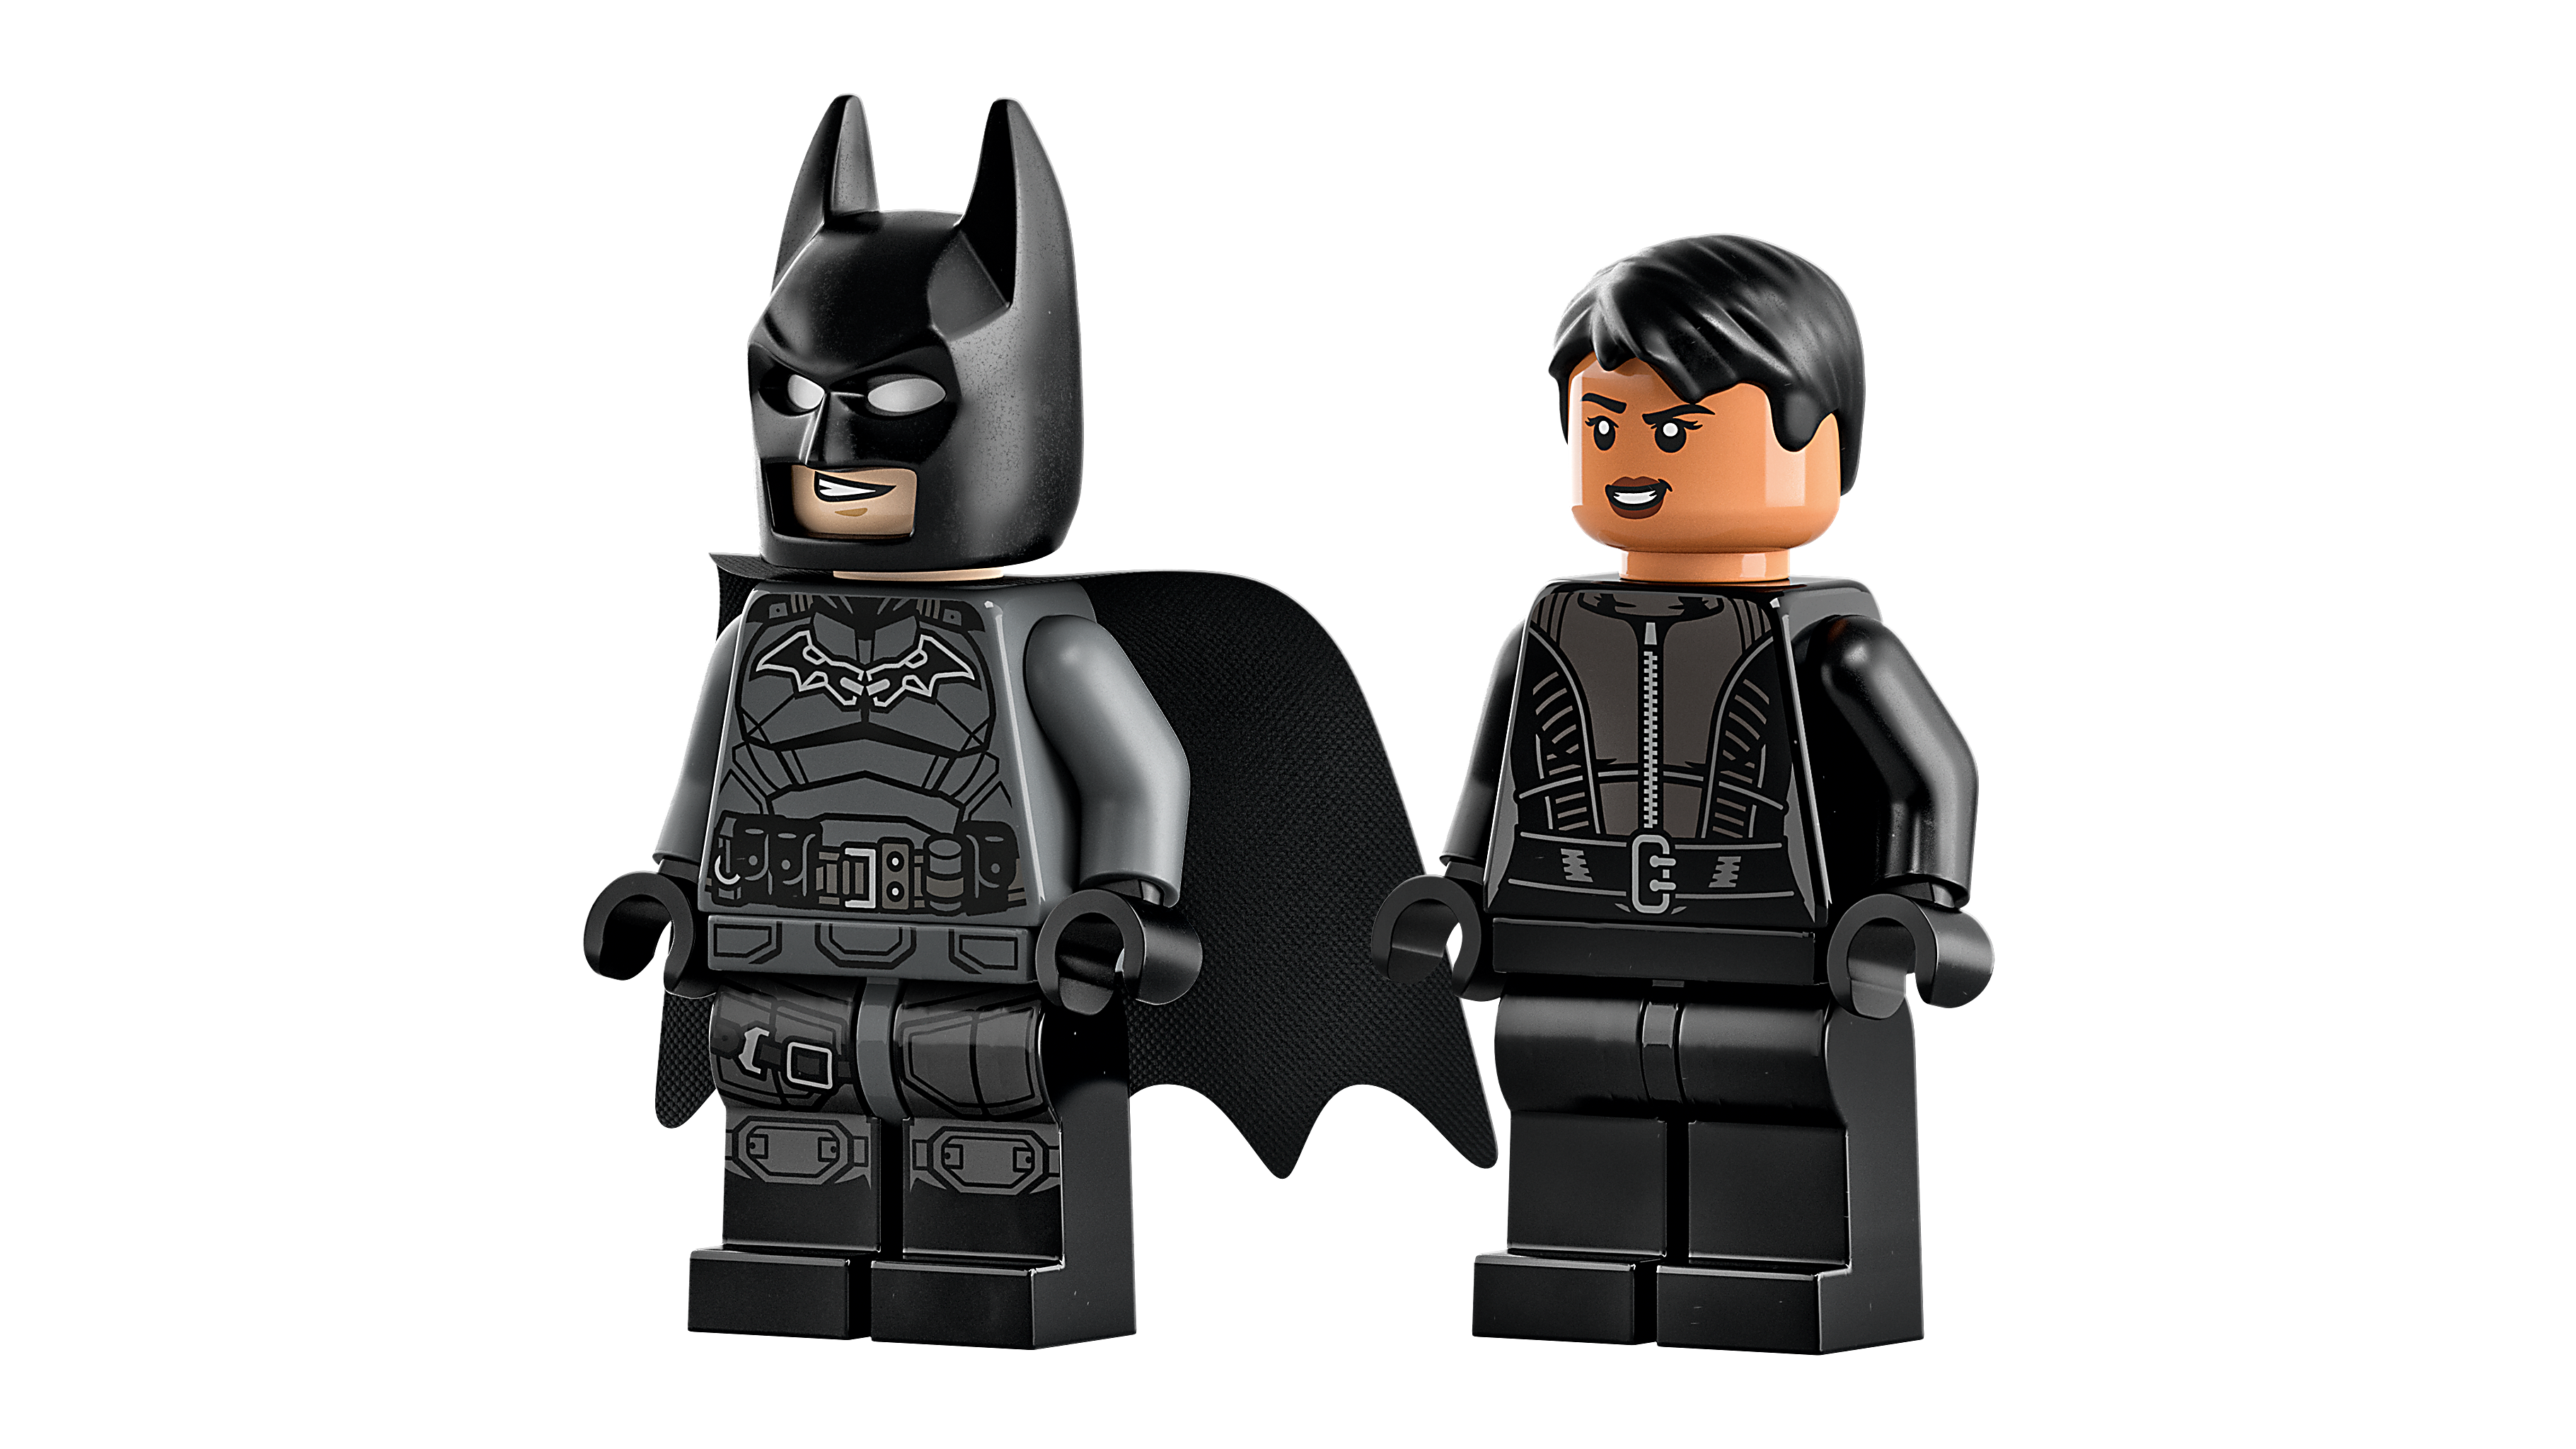 LEGO The Batman